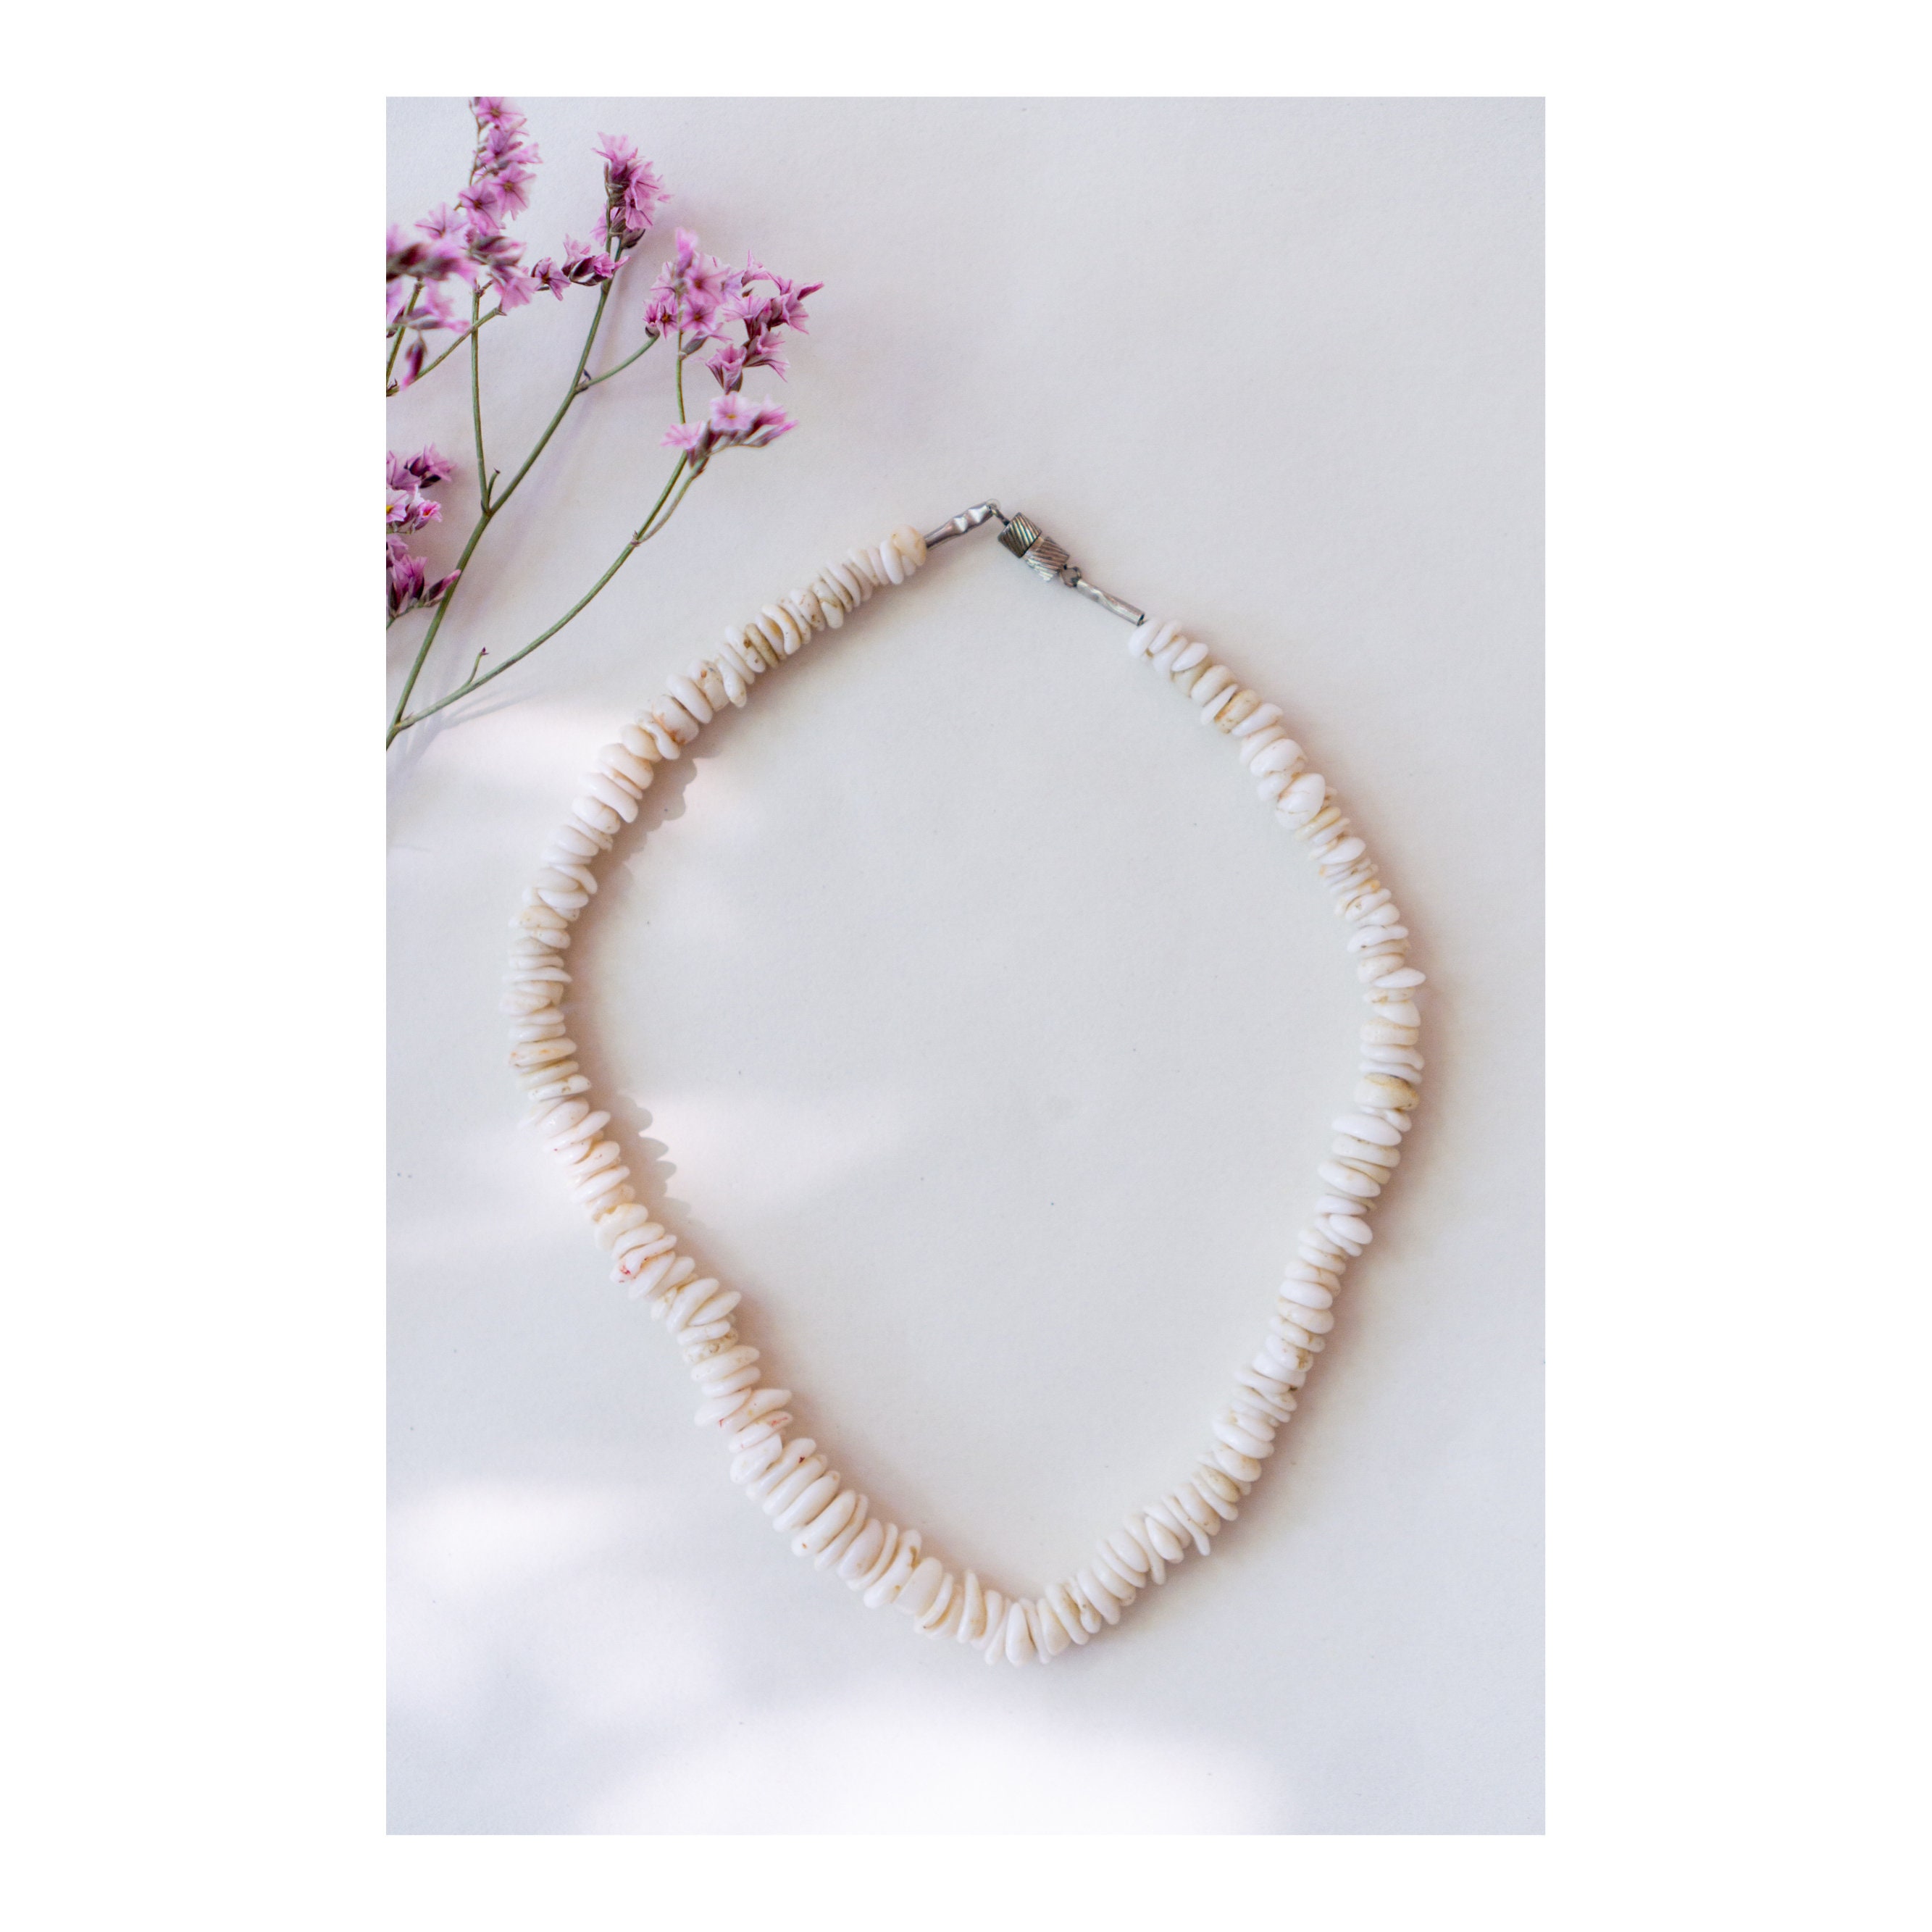 Sold at Auction: vtg 70's genuine puka shell necklace & bracelet